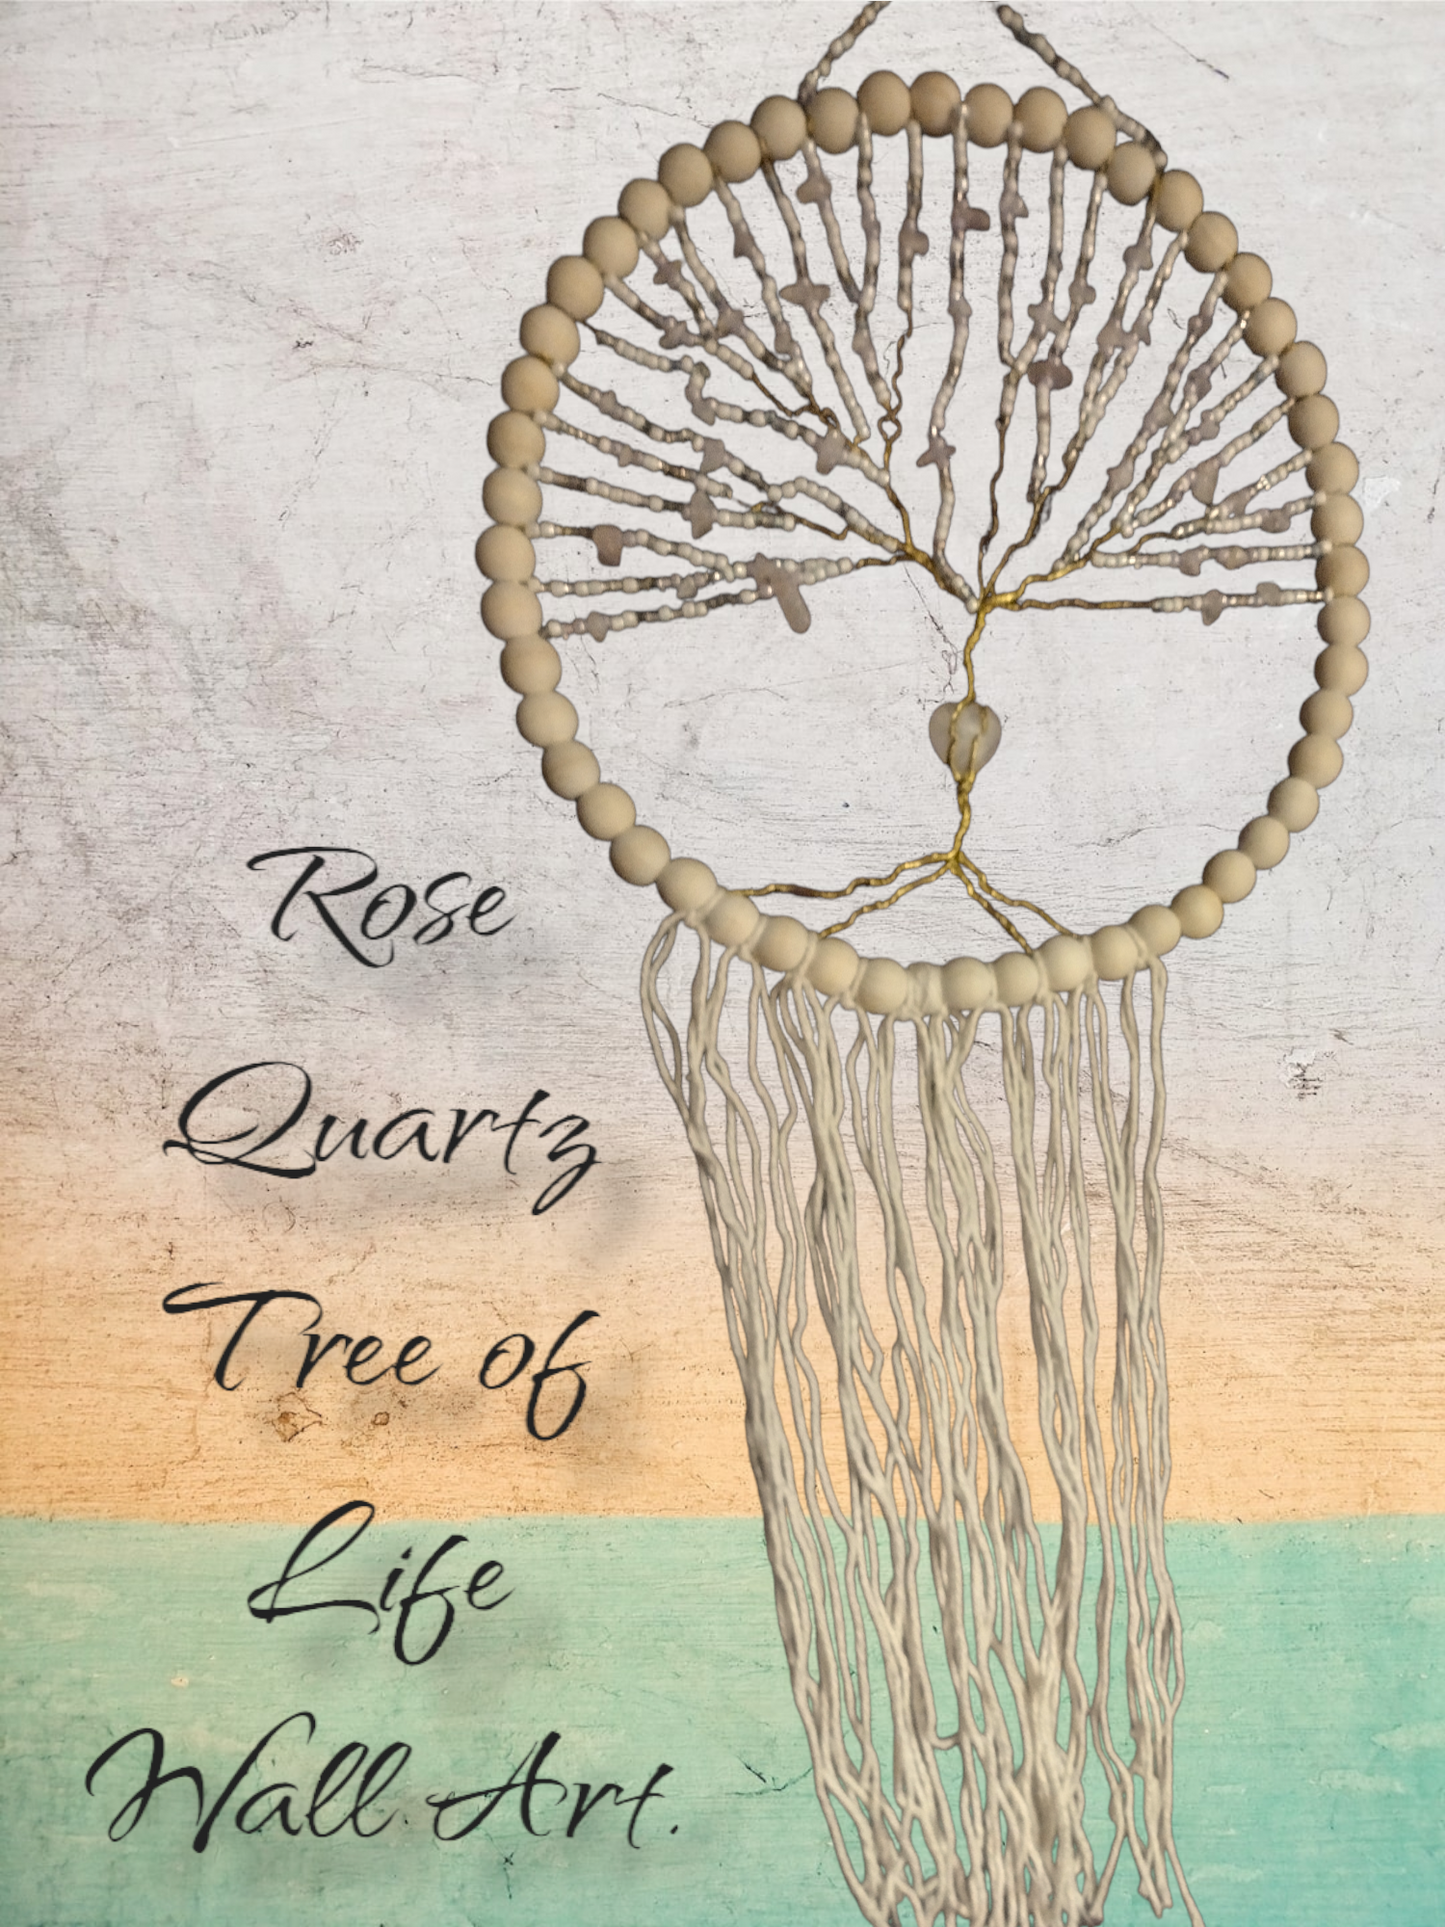 Rose Quartz Tree of Life with Rose Quartz Heart